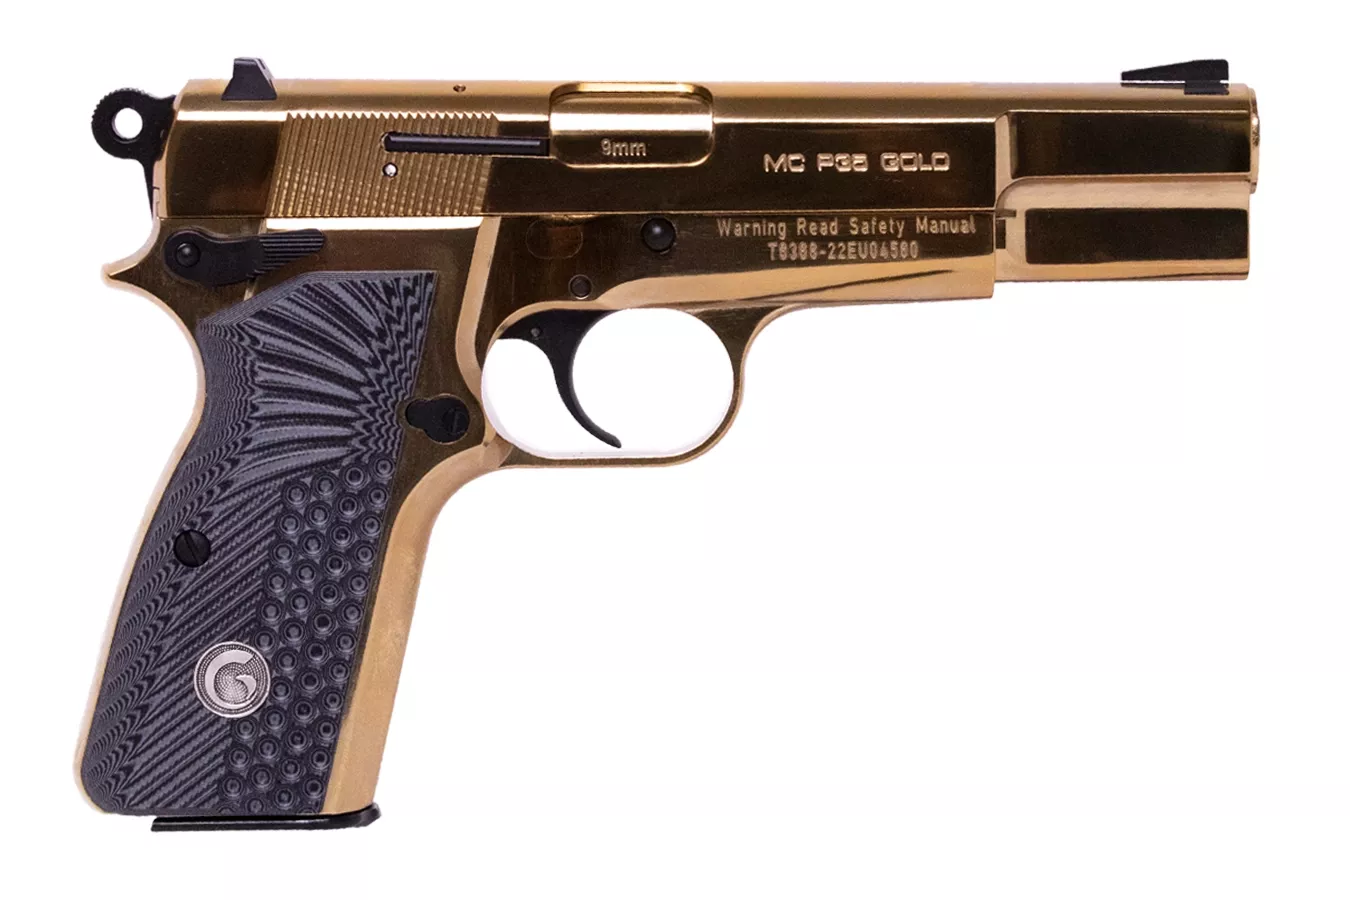 Girsan MCP35 9mm Semi-Auto Pistol in Gold Colored Finish - $665.29 